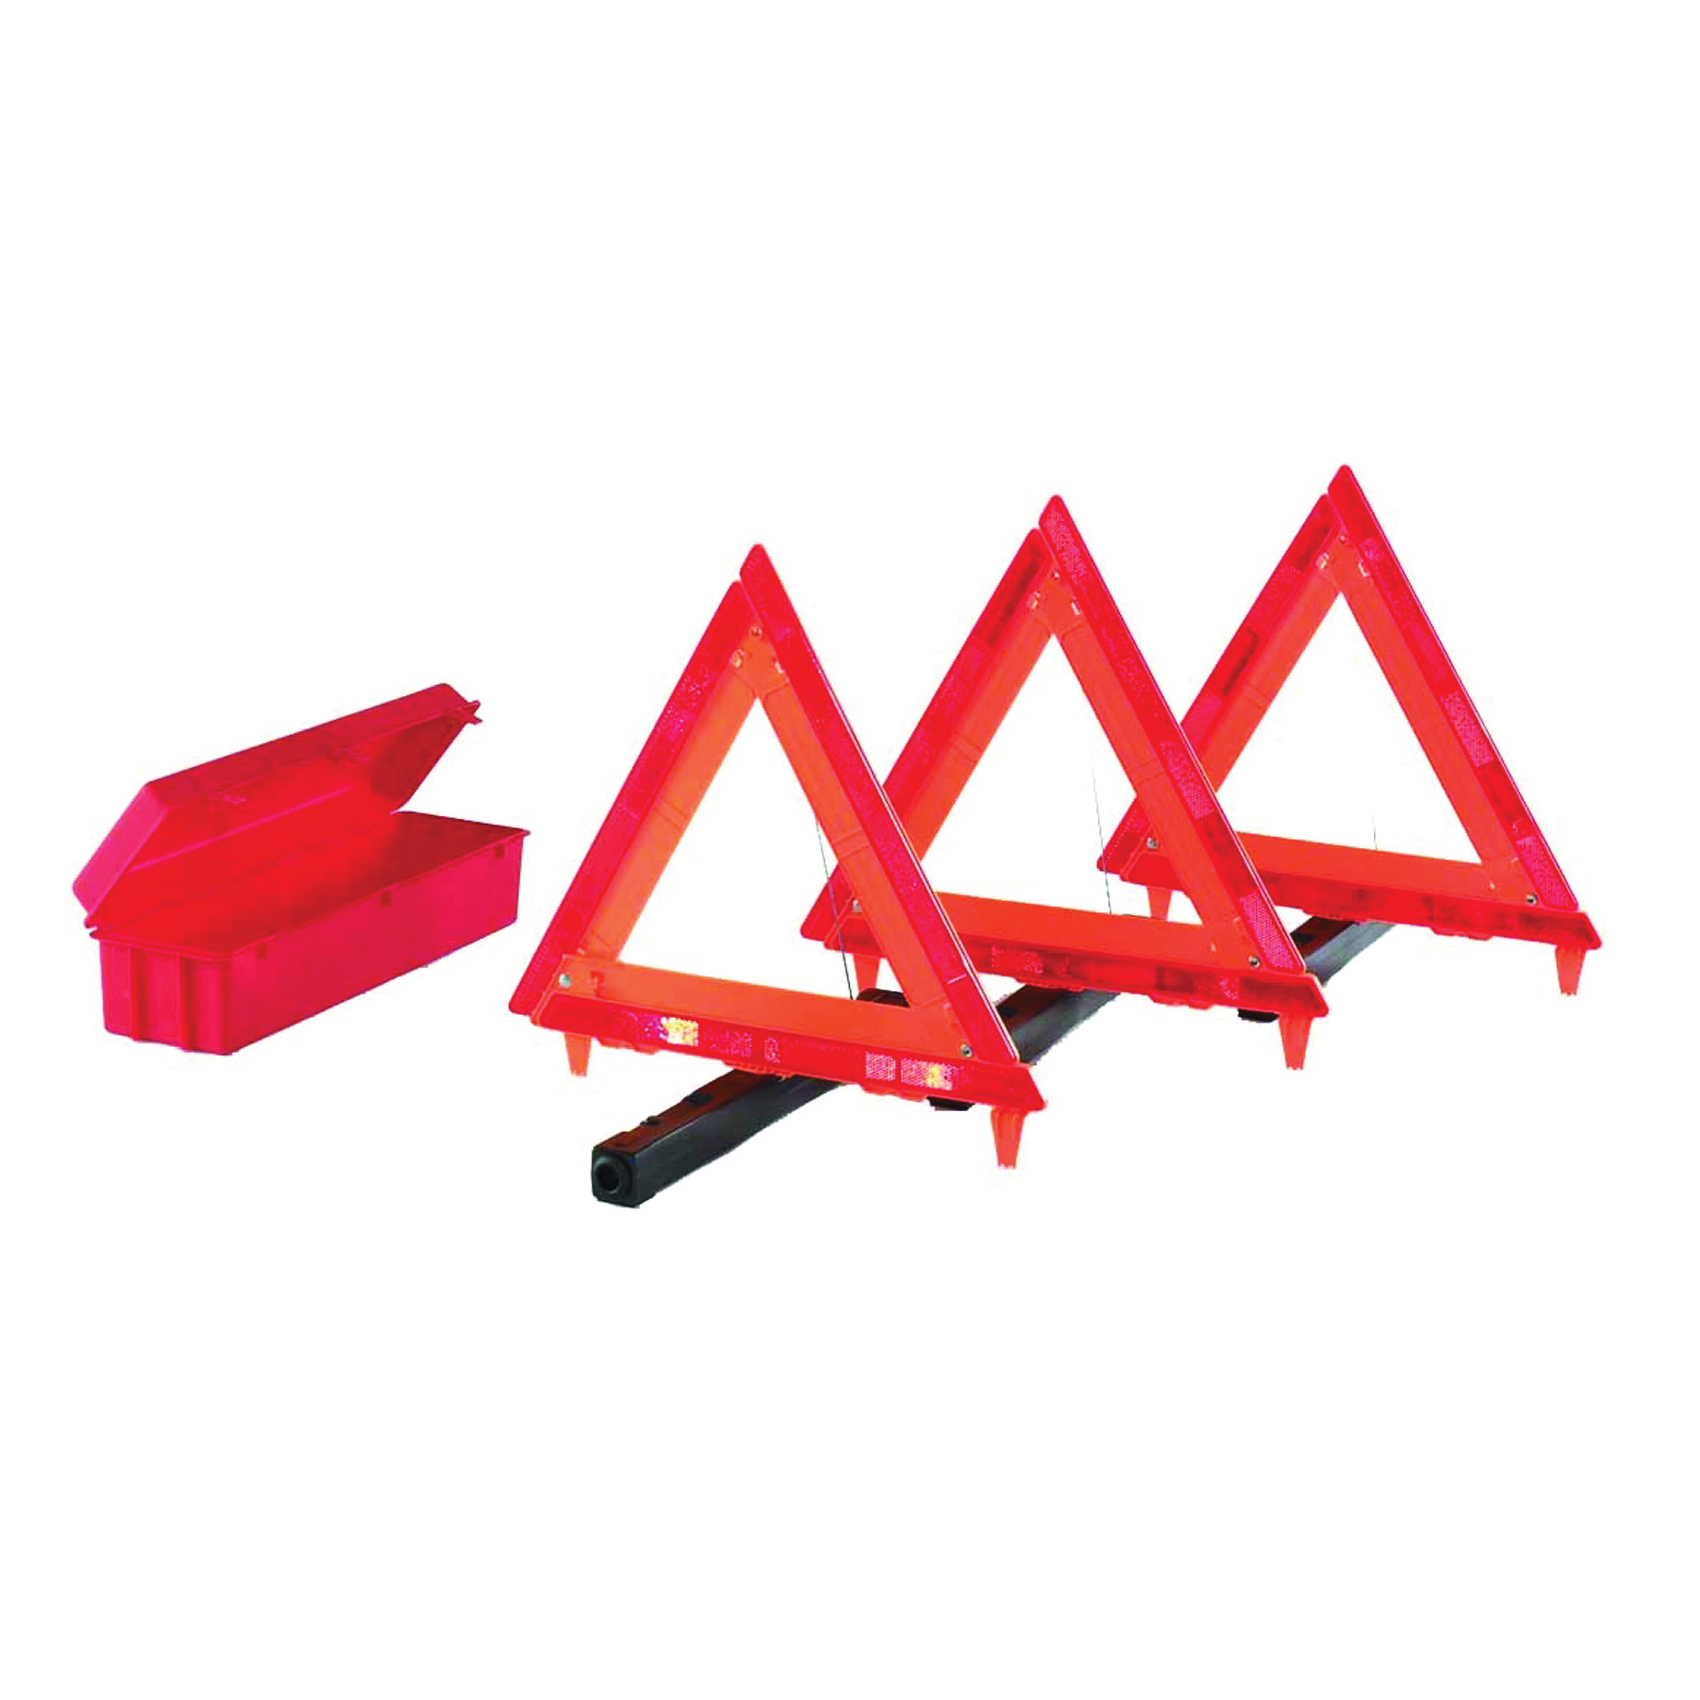 Cortina® 95-03-009 219 Emergency Warning Triangle Kit, 3 Pieces, Acrylic/ABS/Polypropylene, Fluorescent Orange